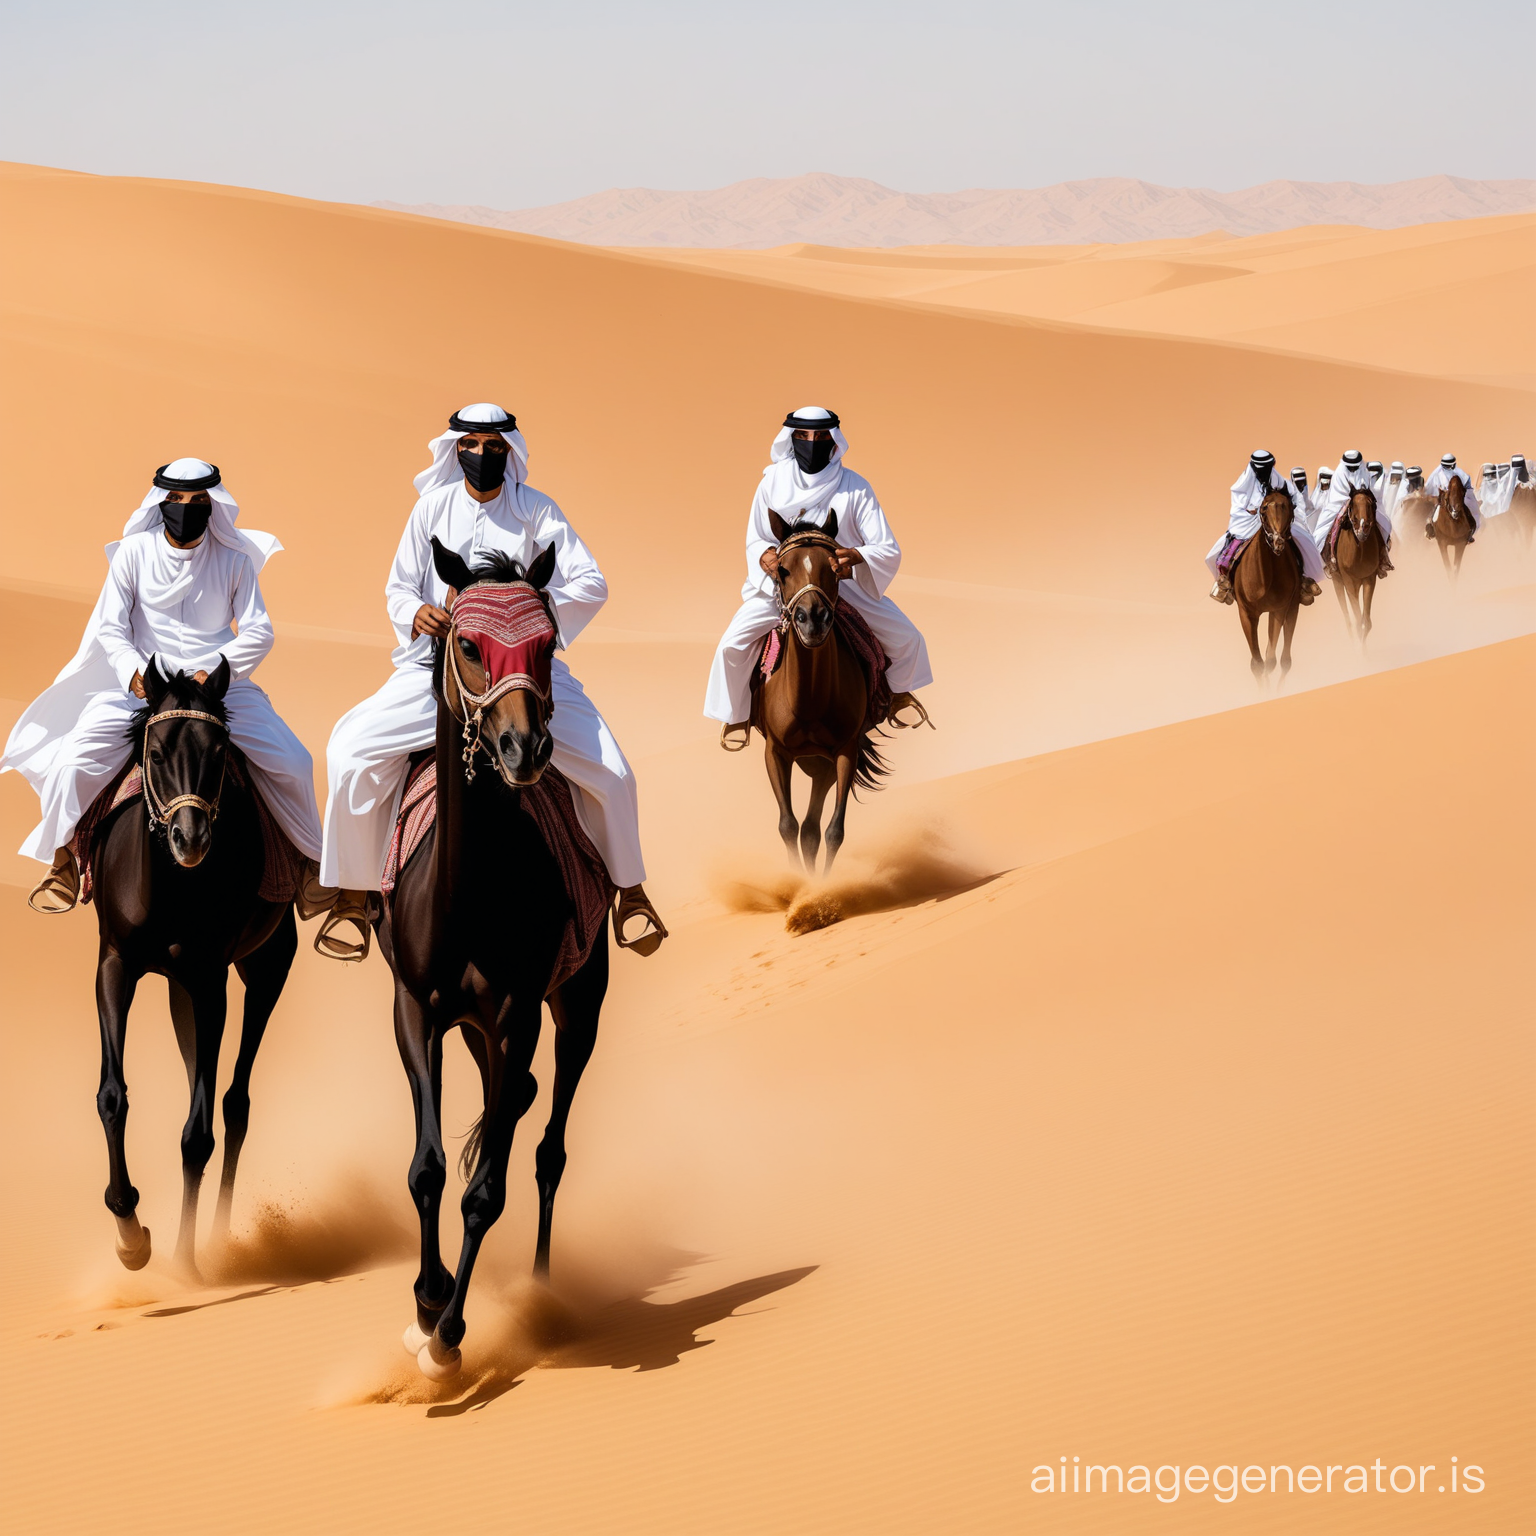 Masked Arabs in a desert